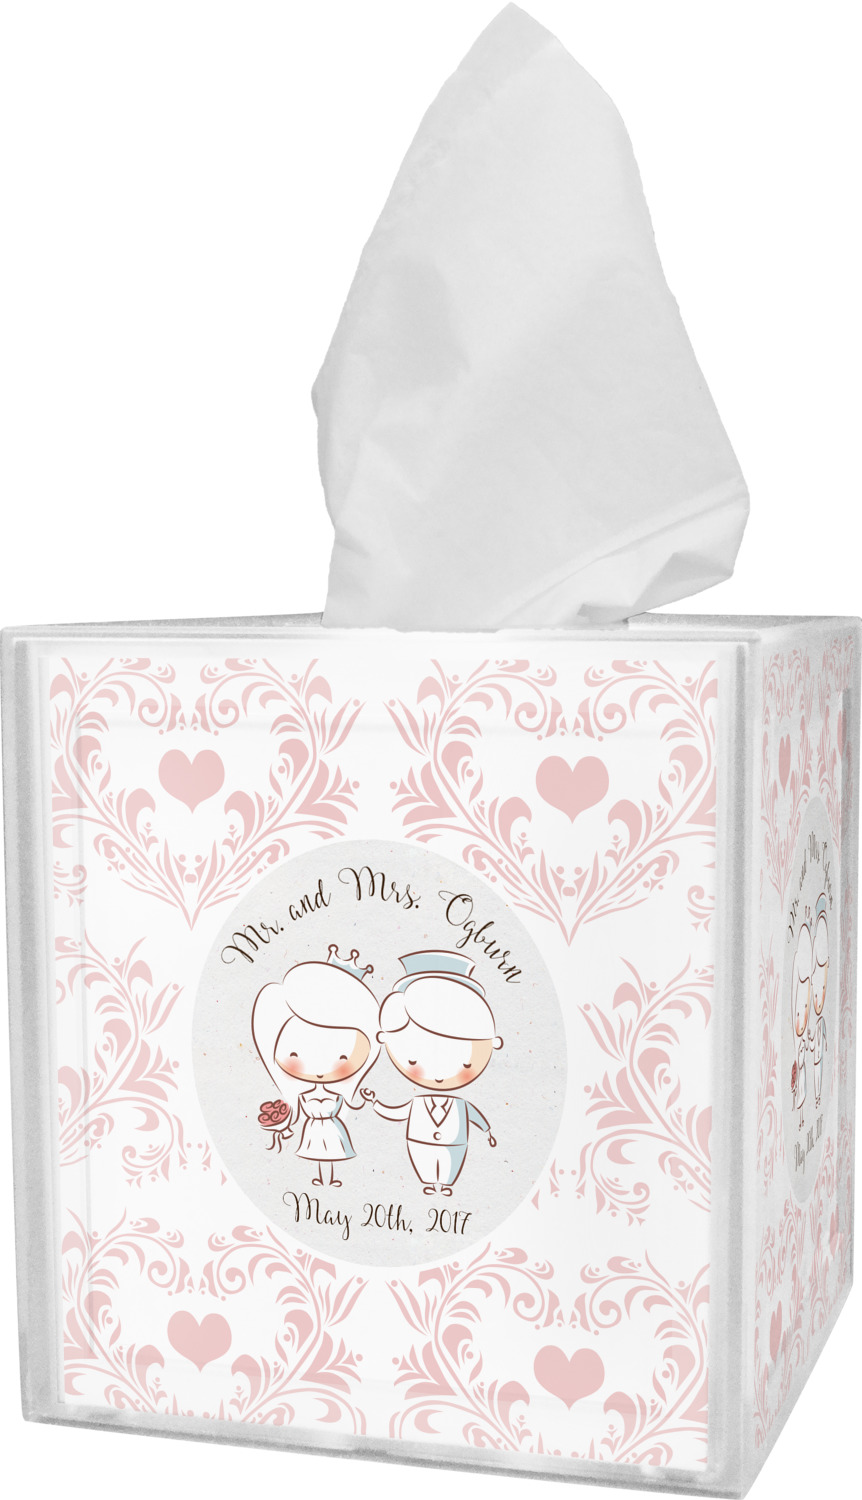 Wedding People Design Custom Tissue Box Cover